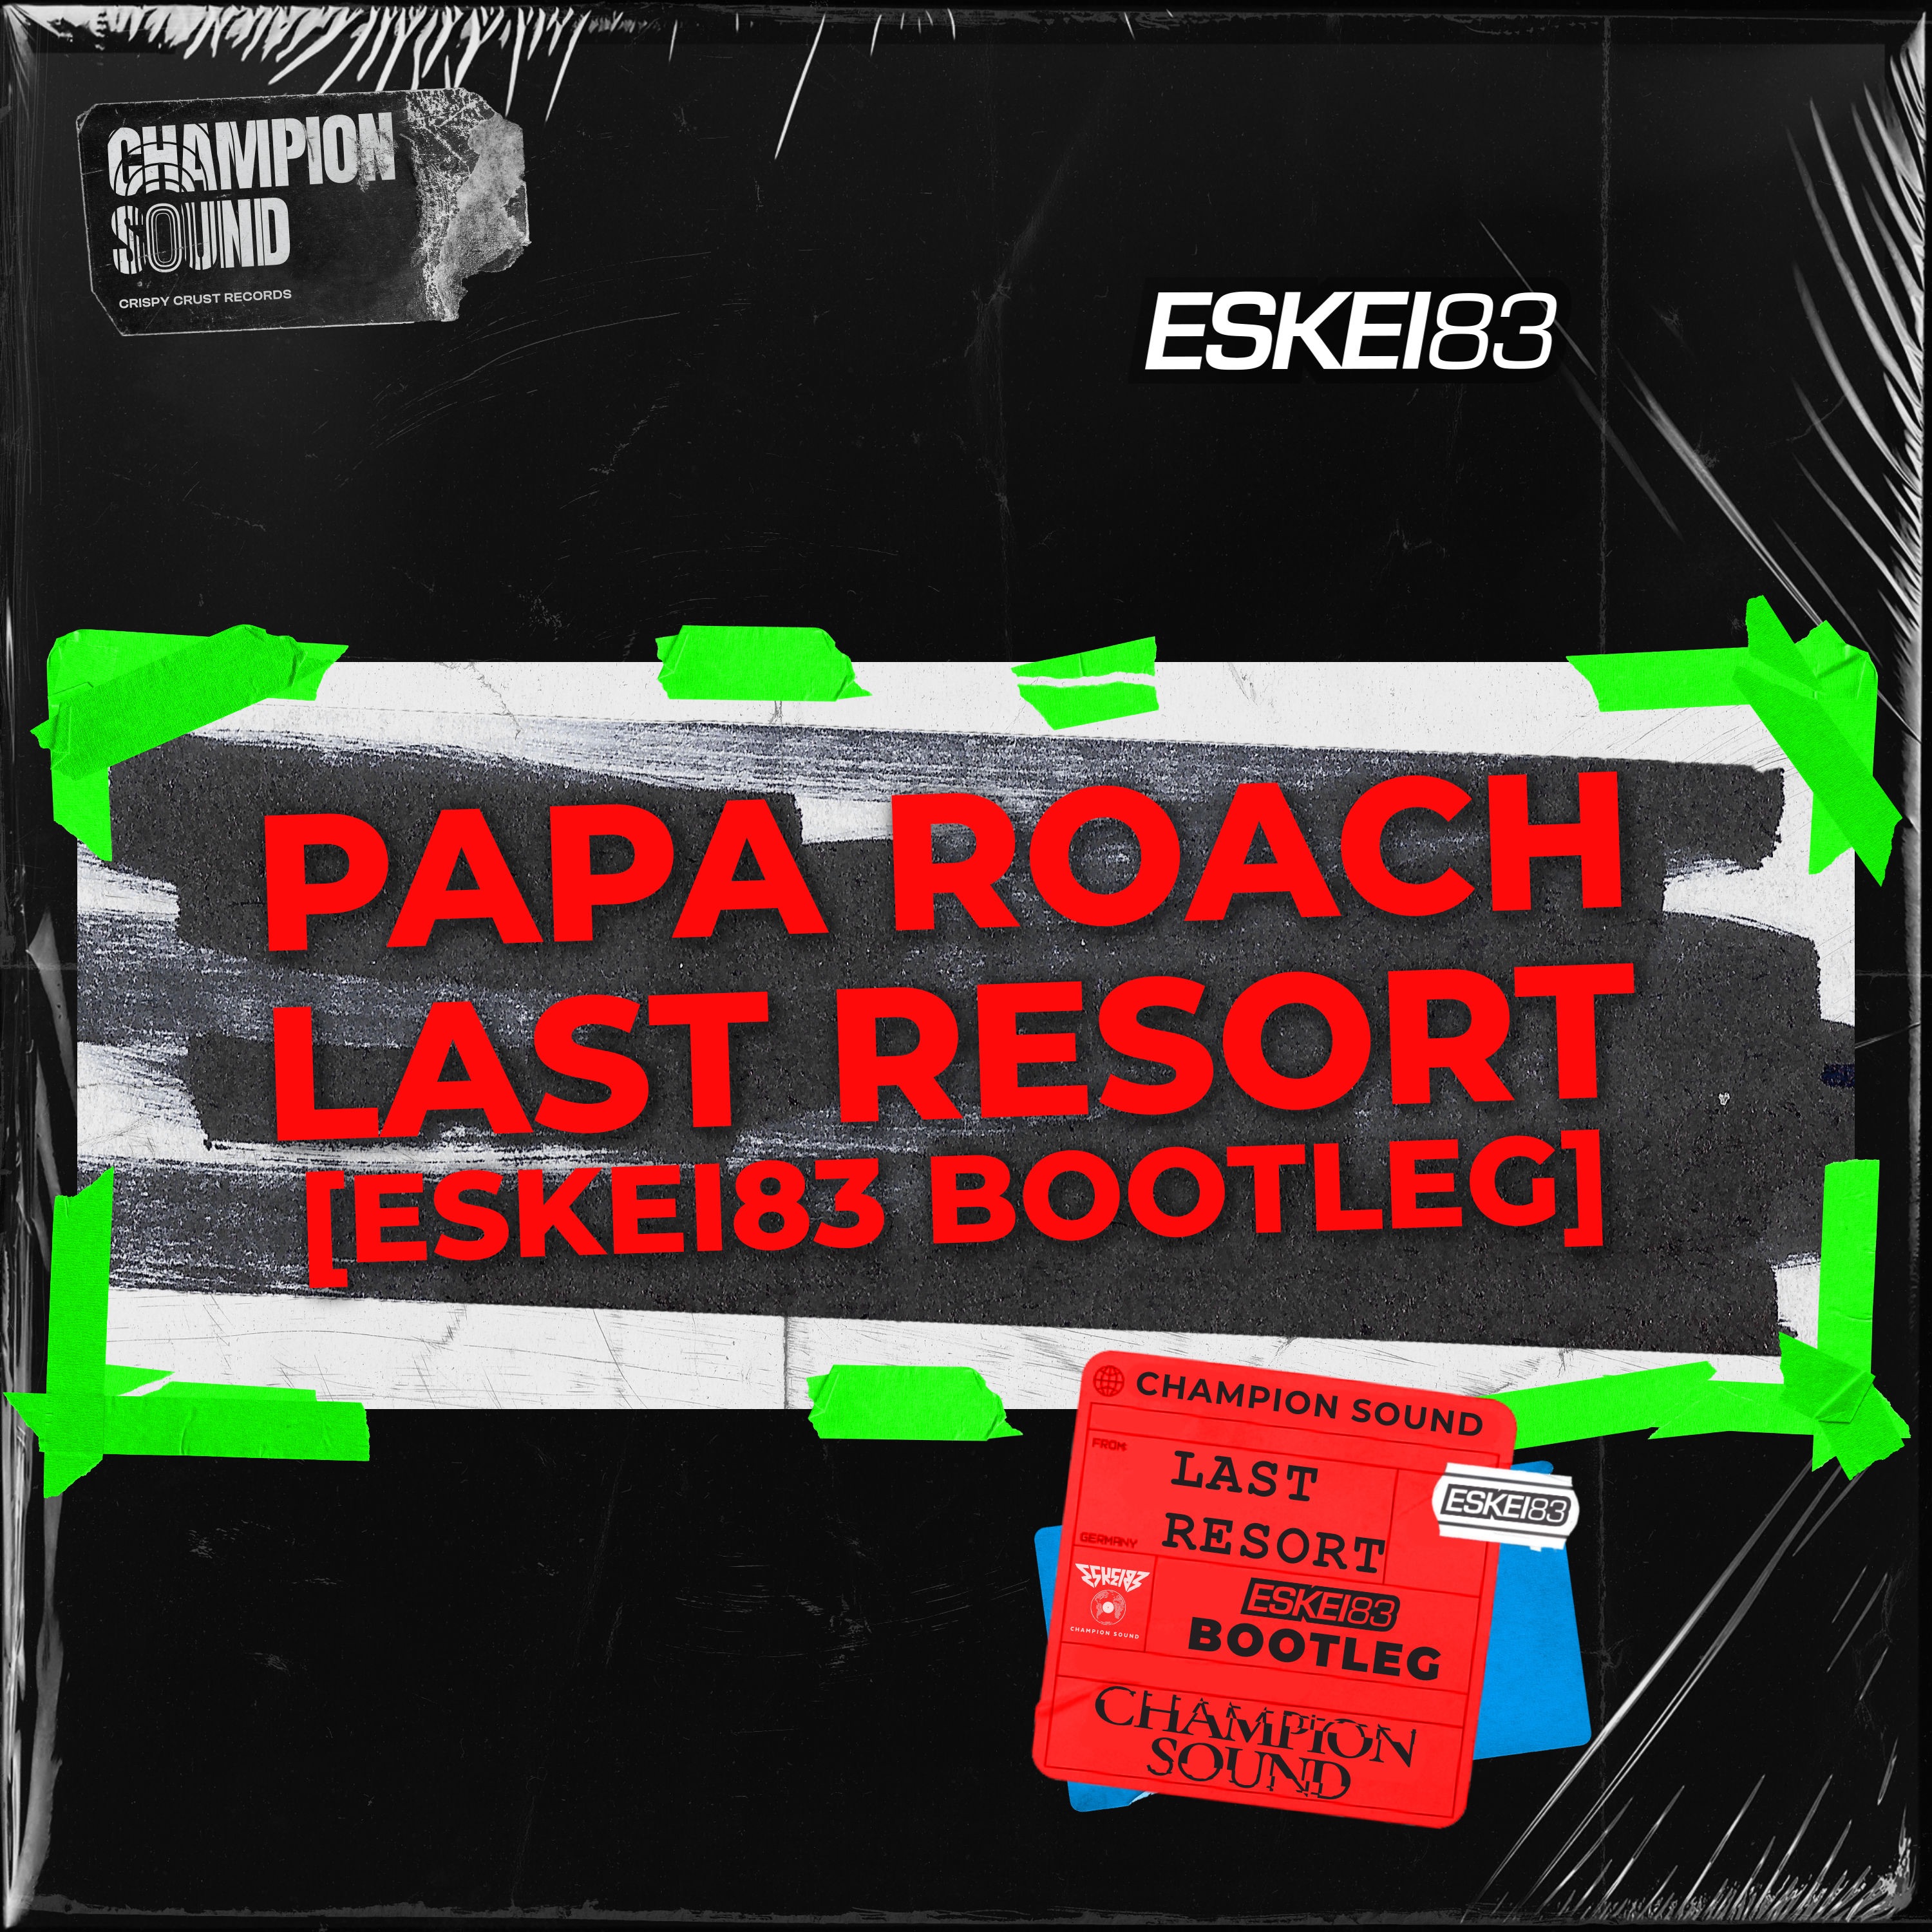 PAPA ROACH - LAST RESORT ESKEi83 BOOTLEG